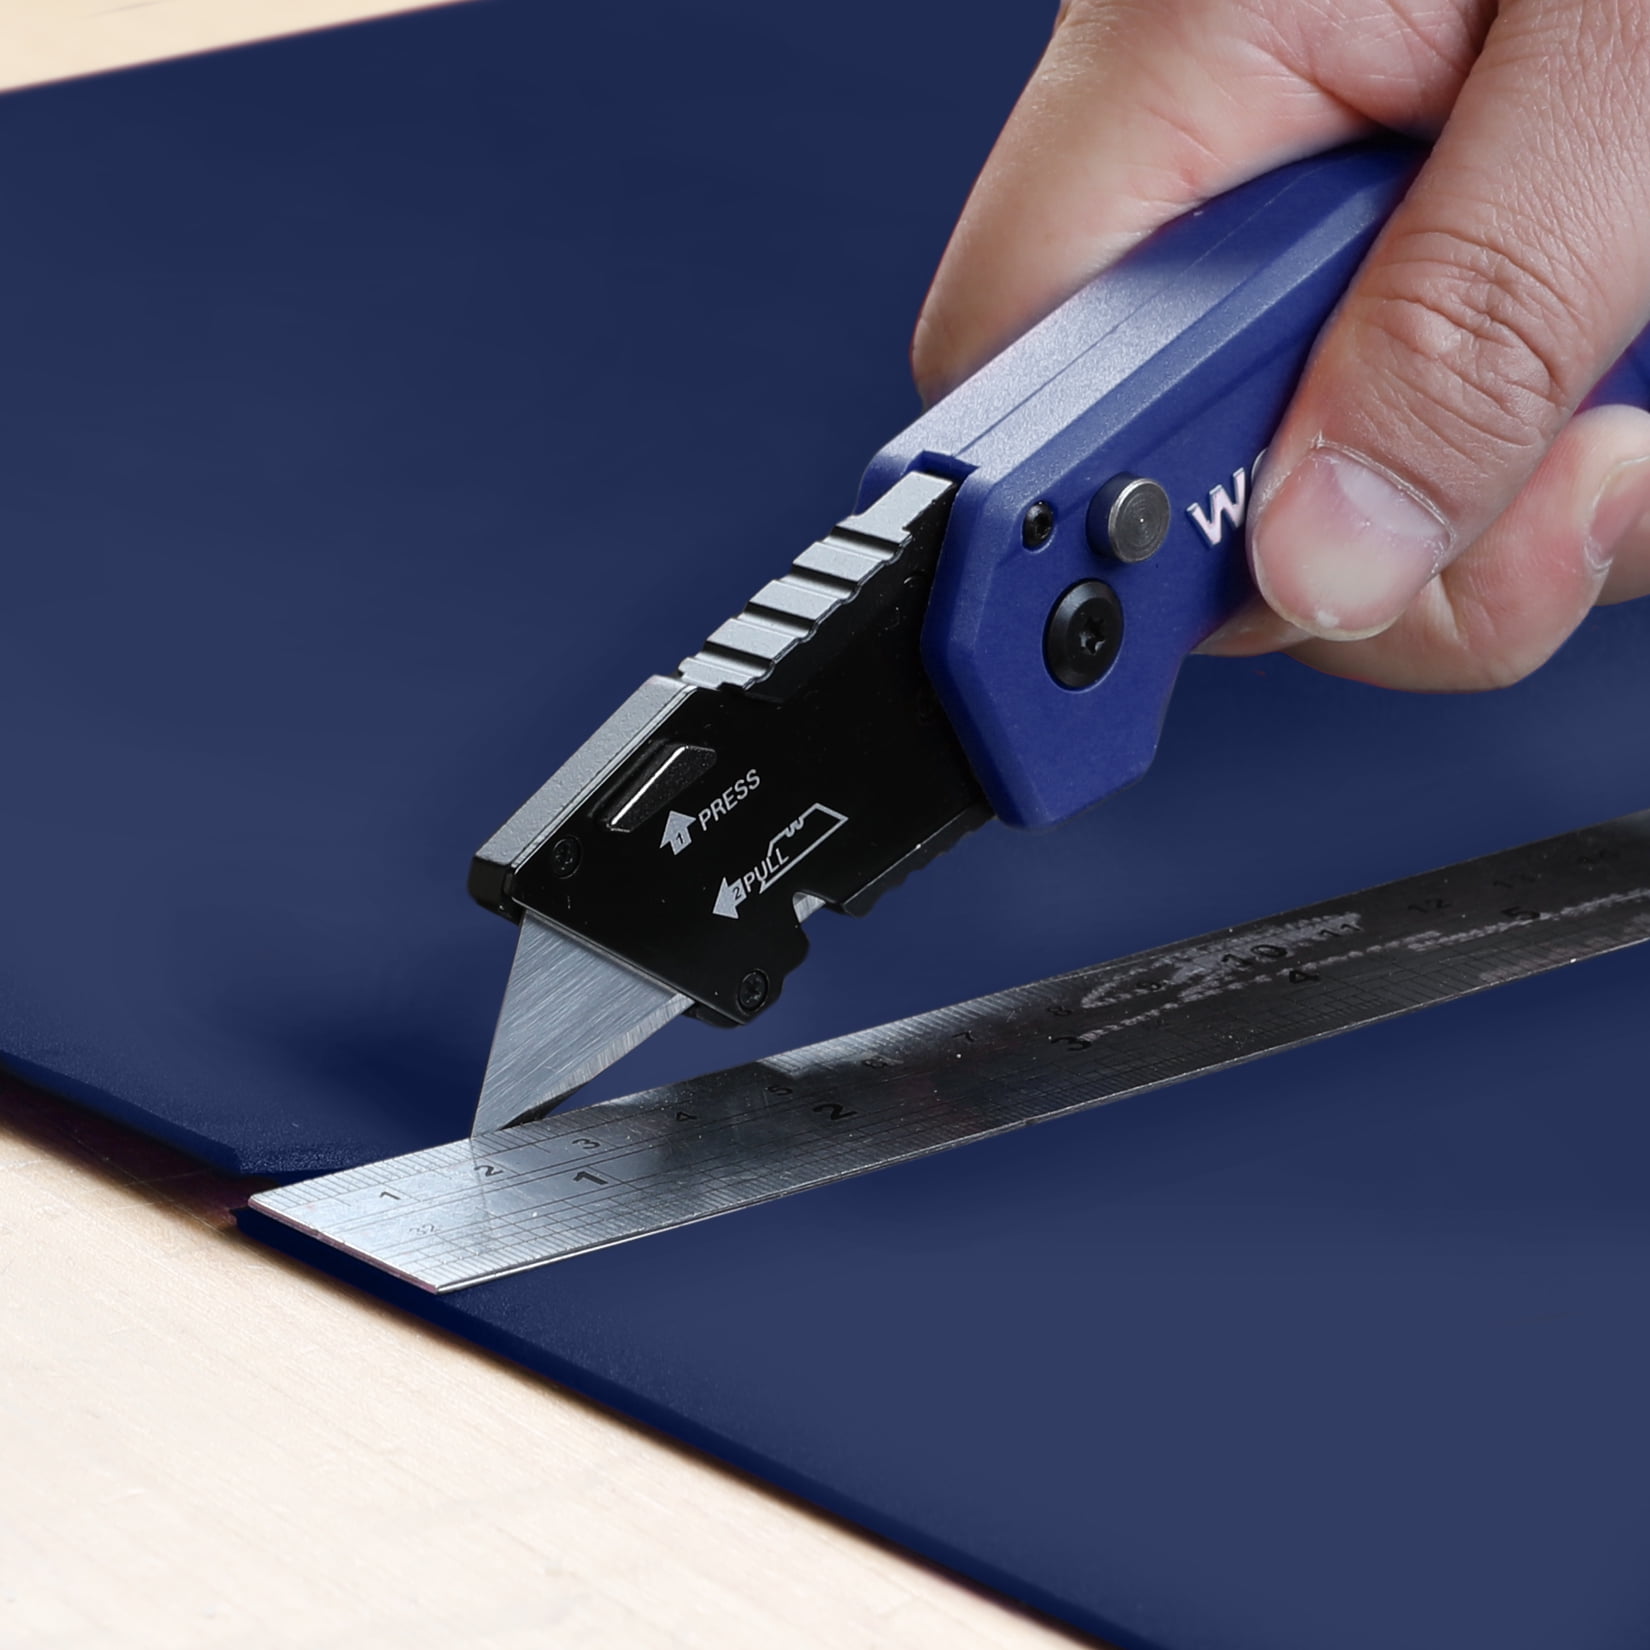 Folding Utility Knife, Pink-WORKPRO® Tools